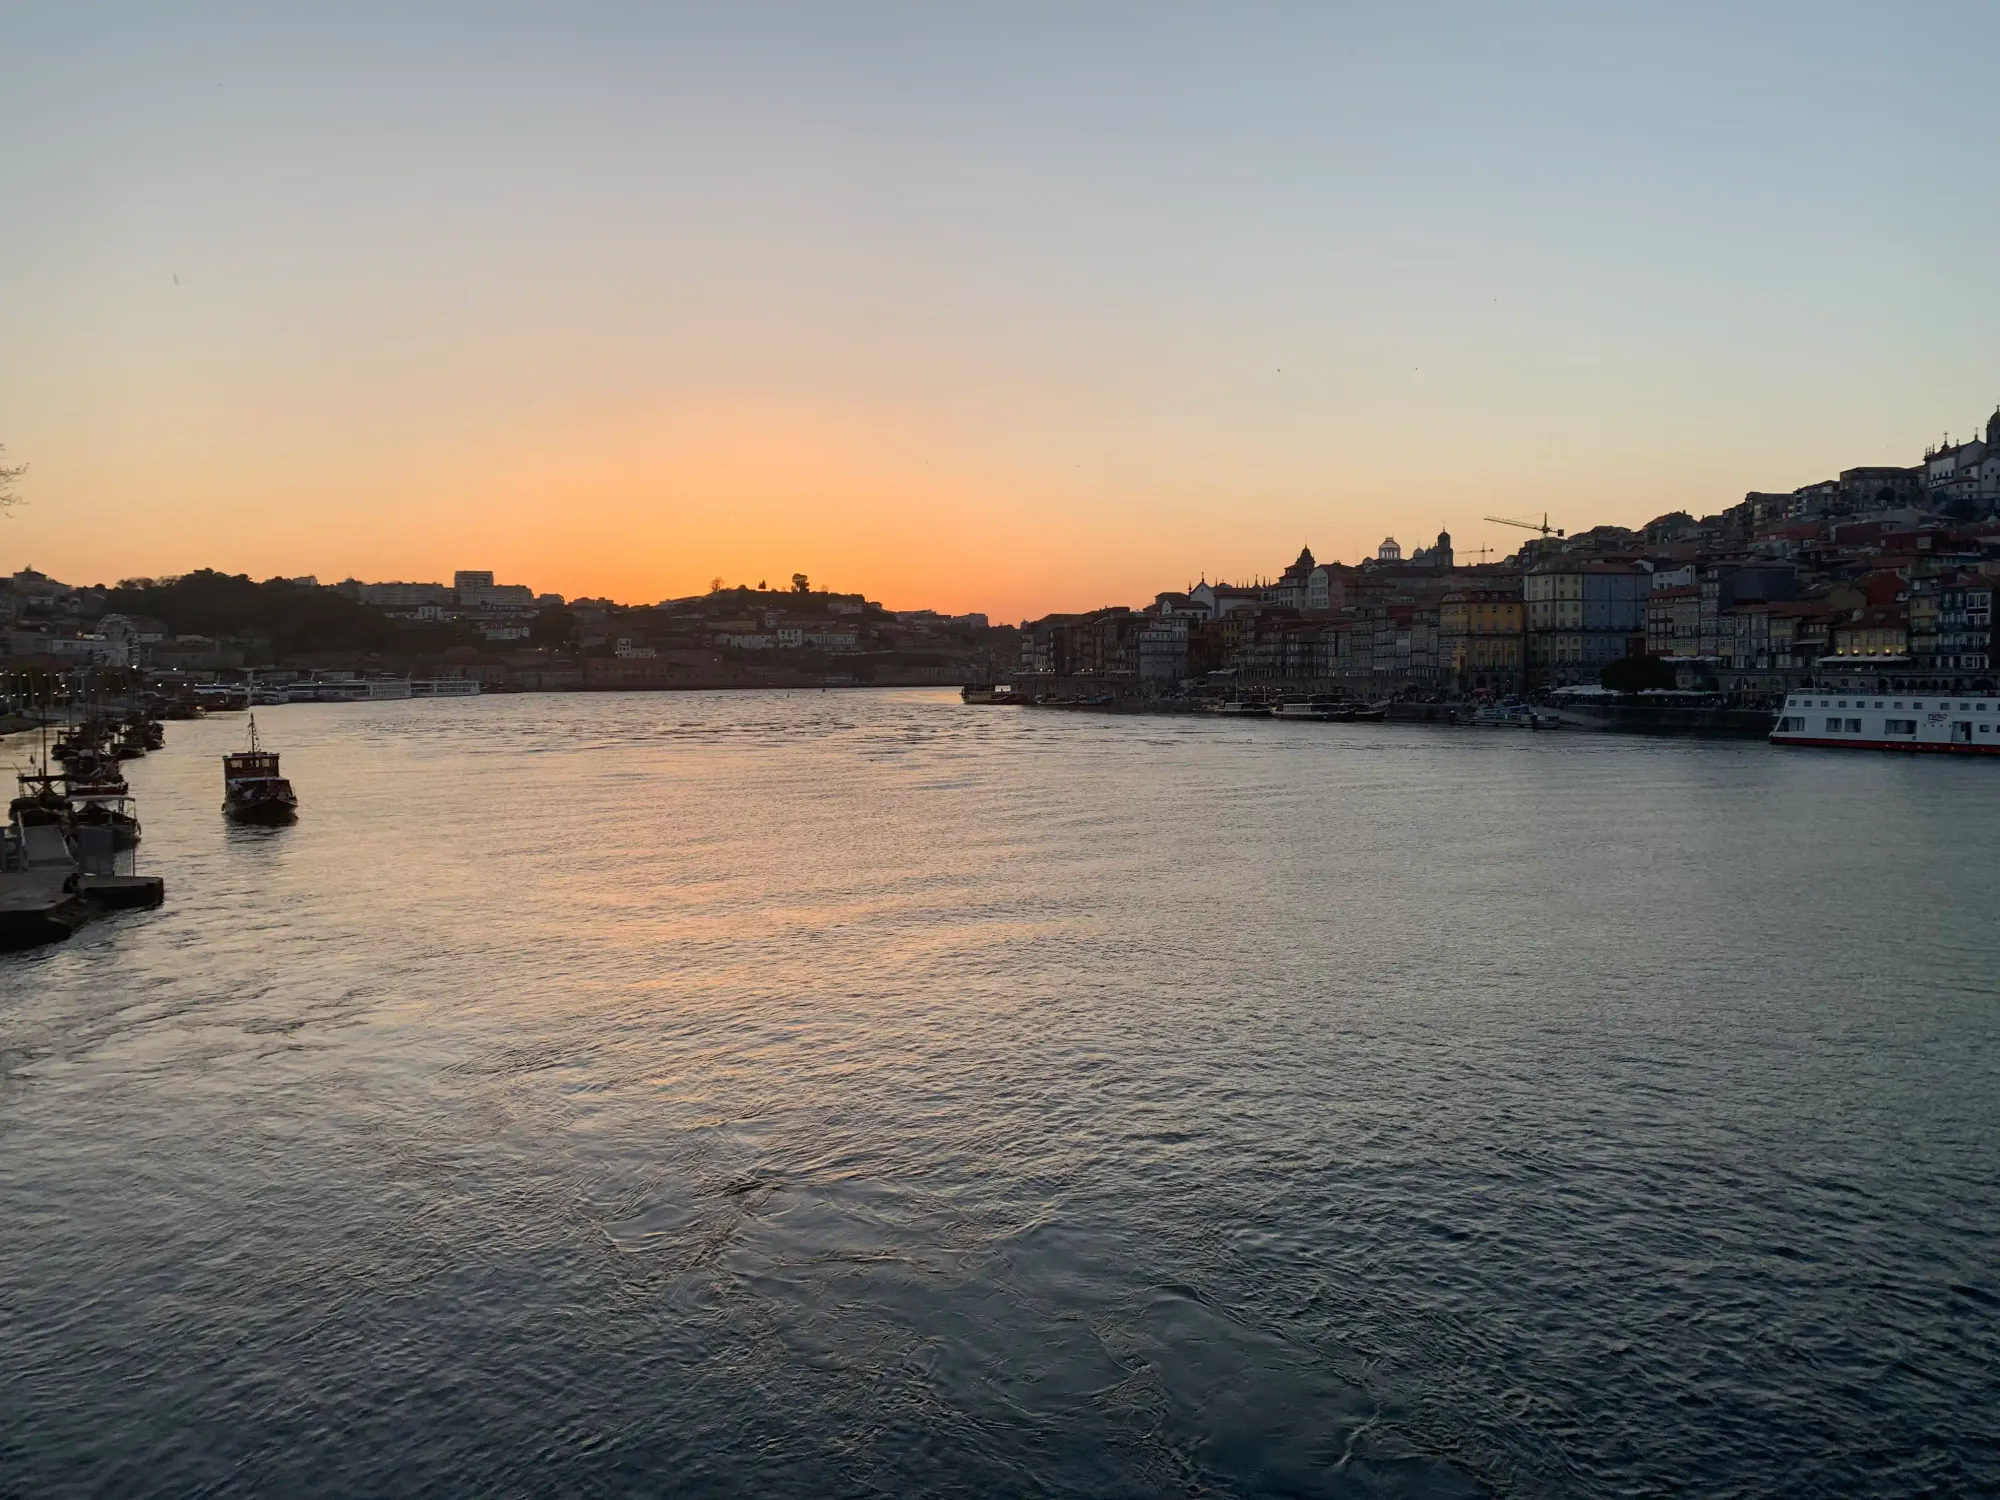 A view of the river in Porto